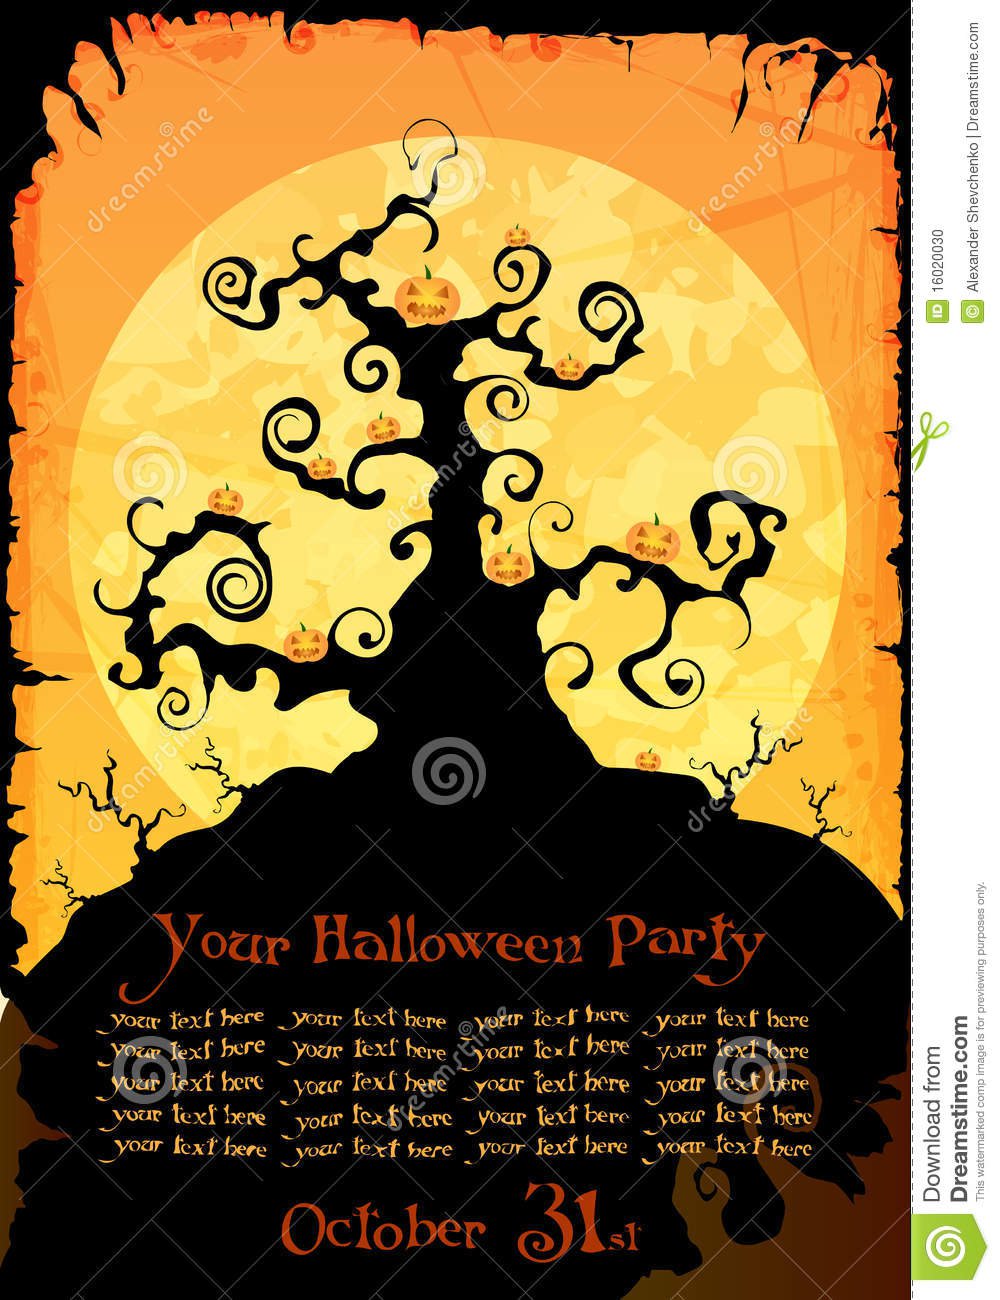 Cool Halloween Invitations